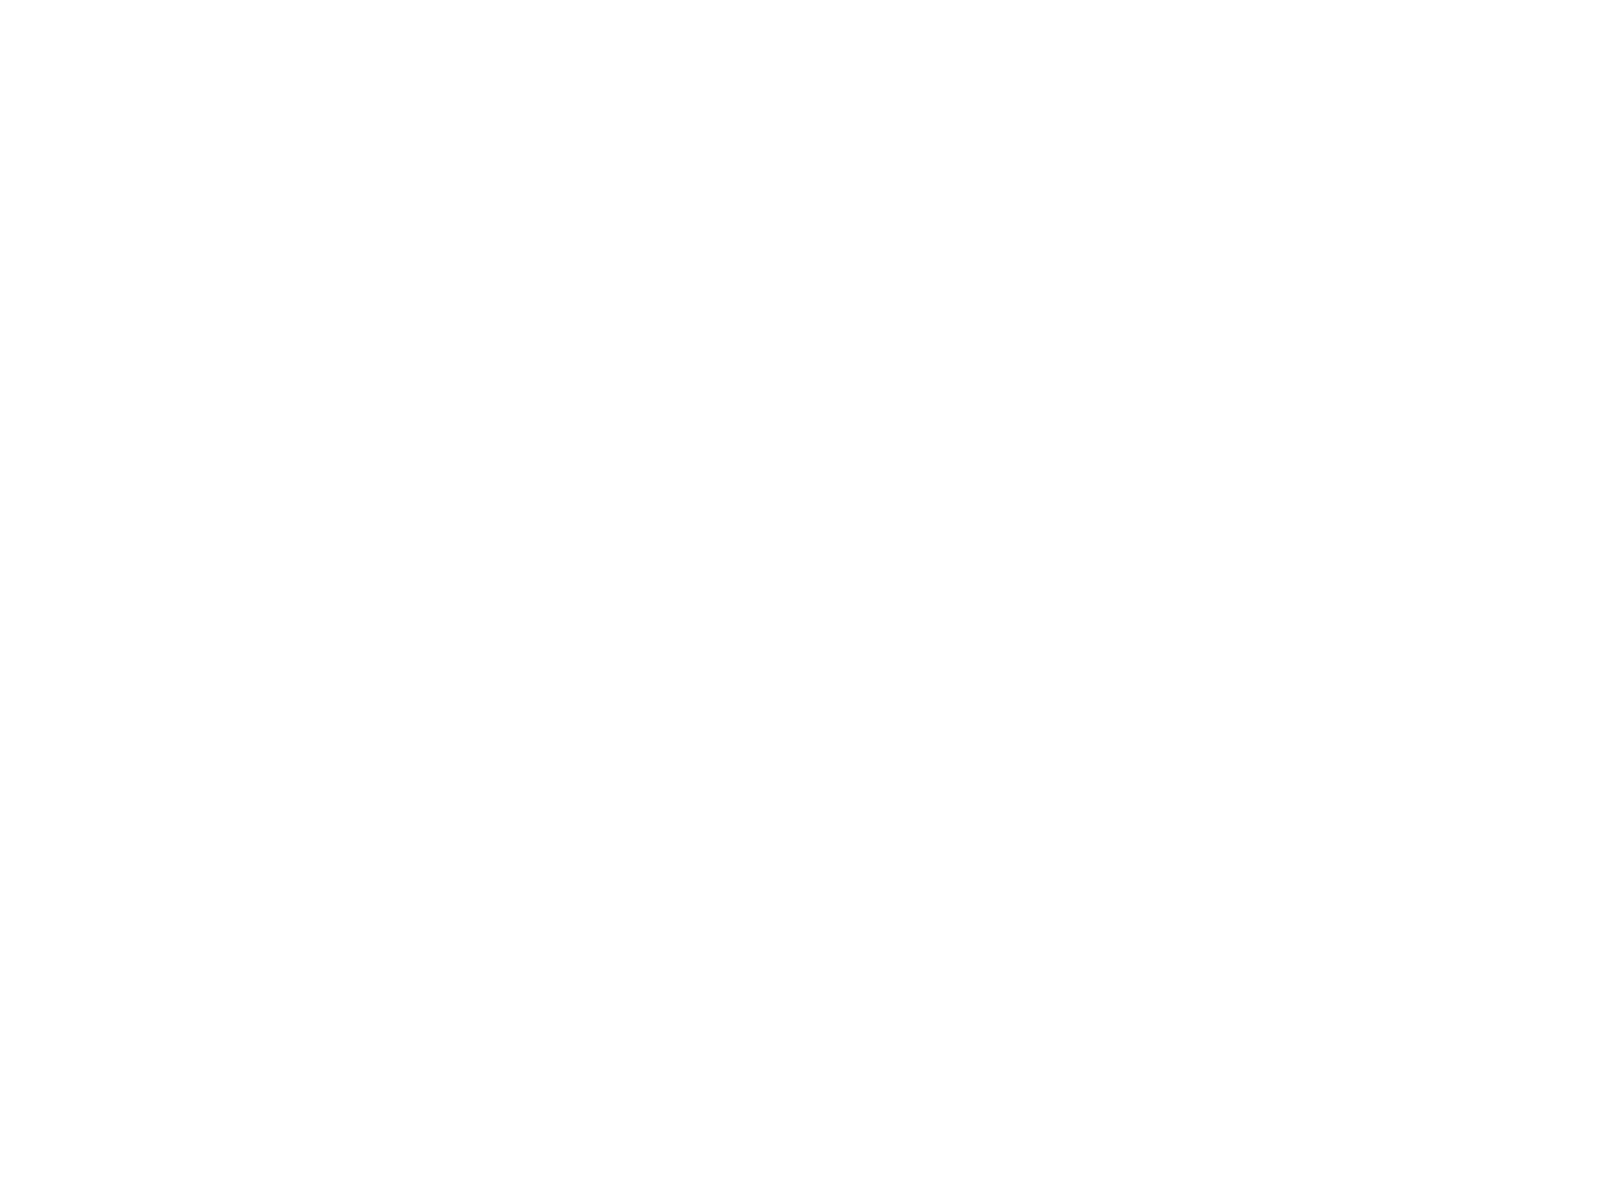 Sky Atlas logo 2